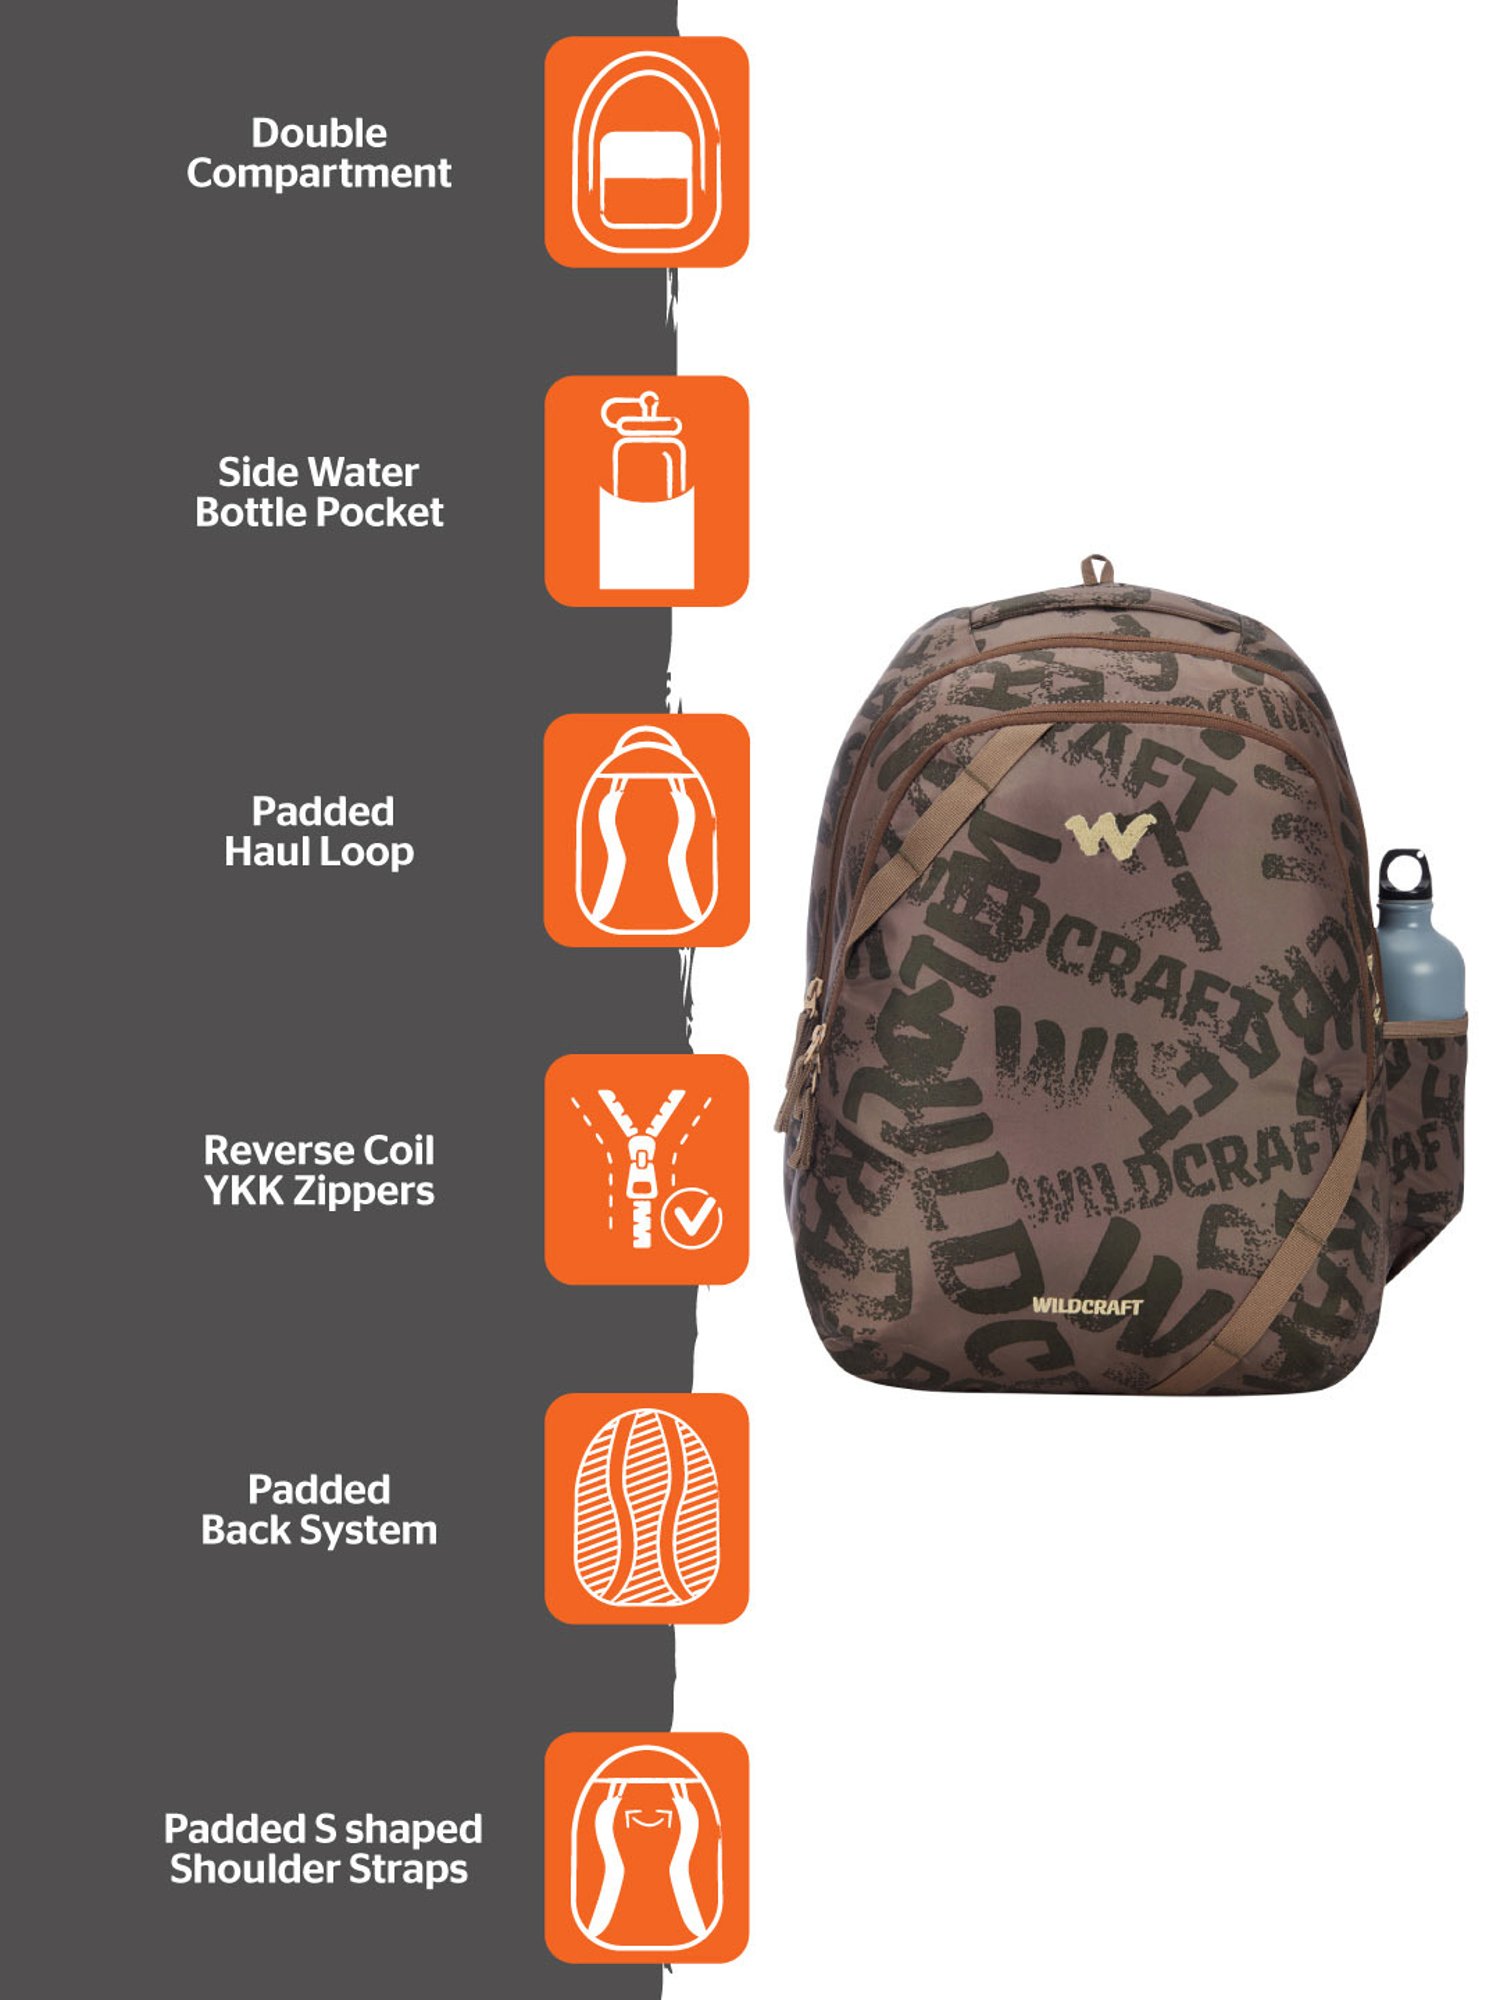 Buy Wildcraft WIKI Backpack Gadget Black 18.5 inch Online - Shop Stationery  & School Supplies on Carrefour Saudi Arabia